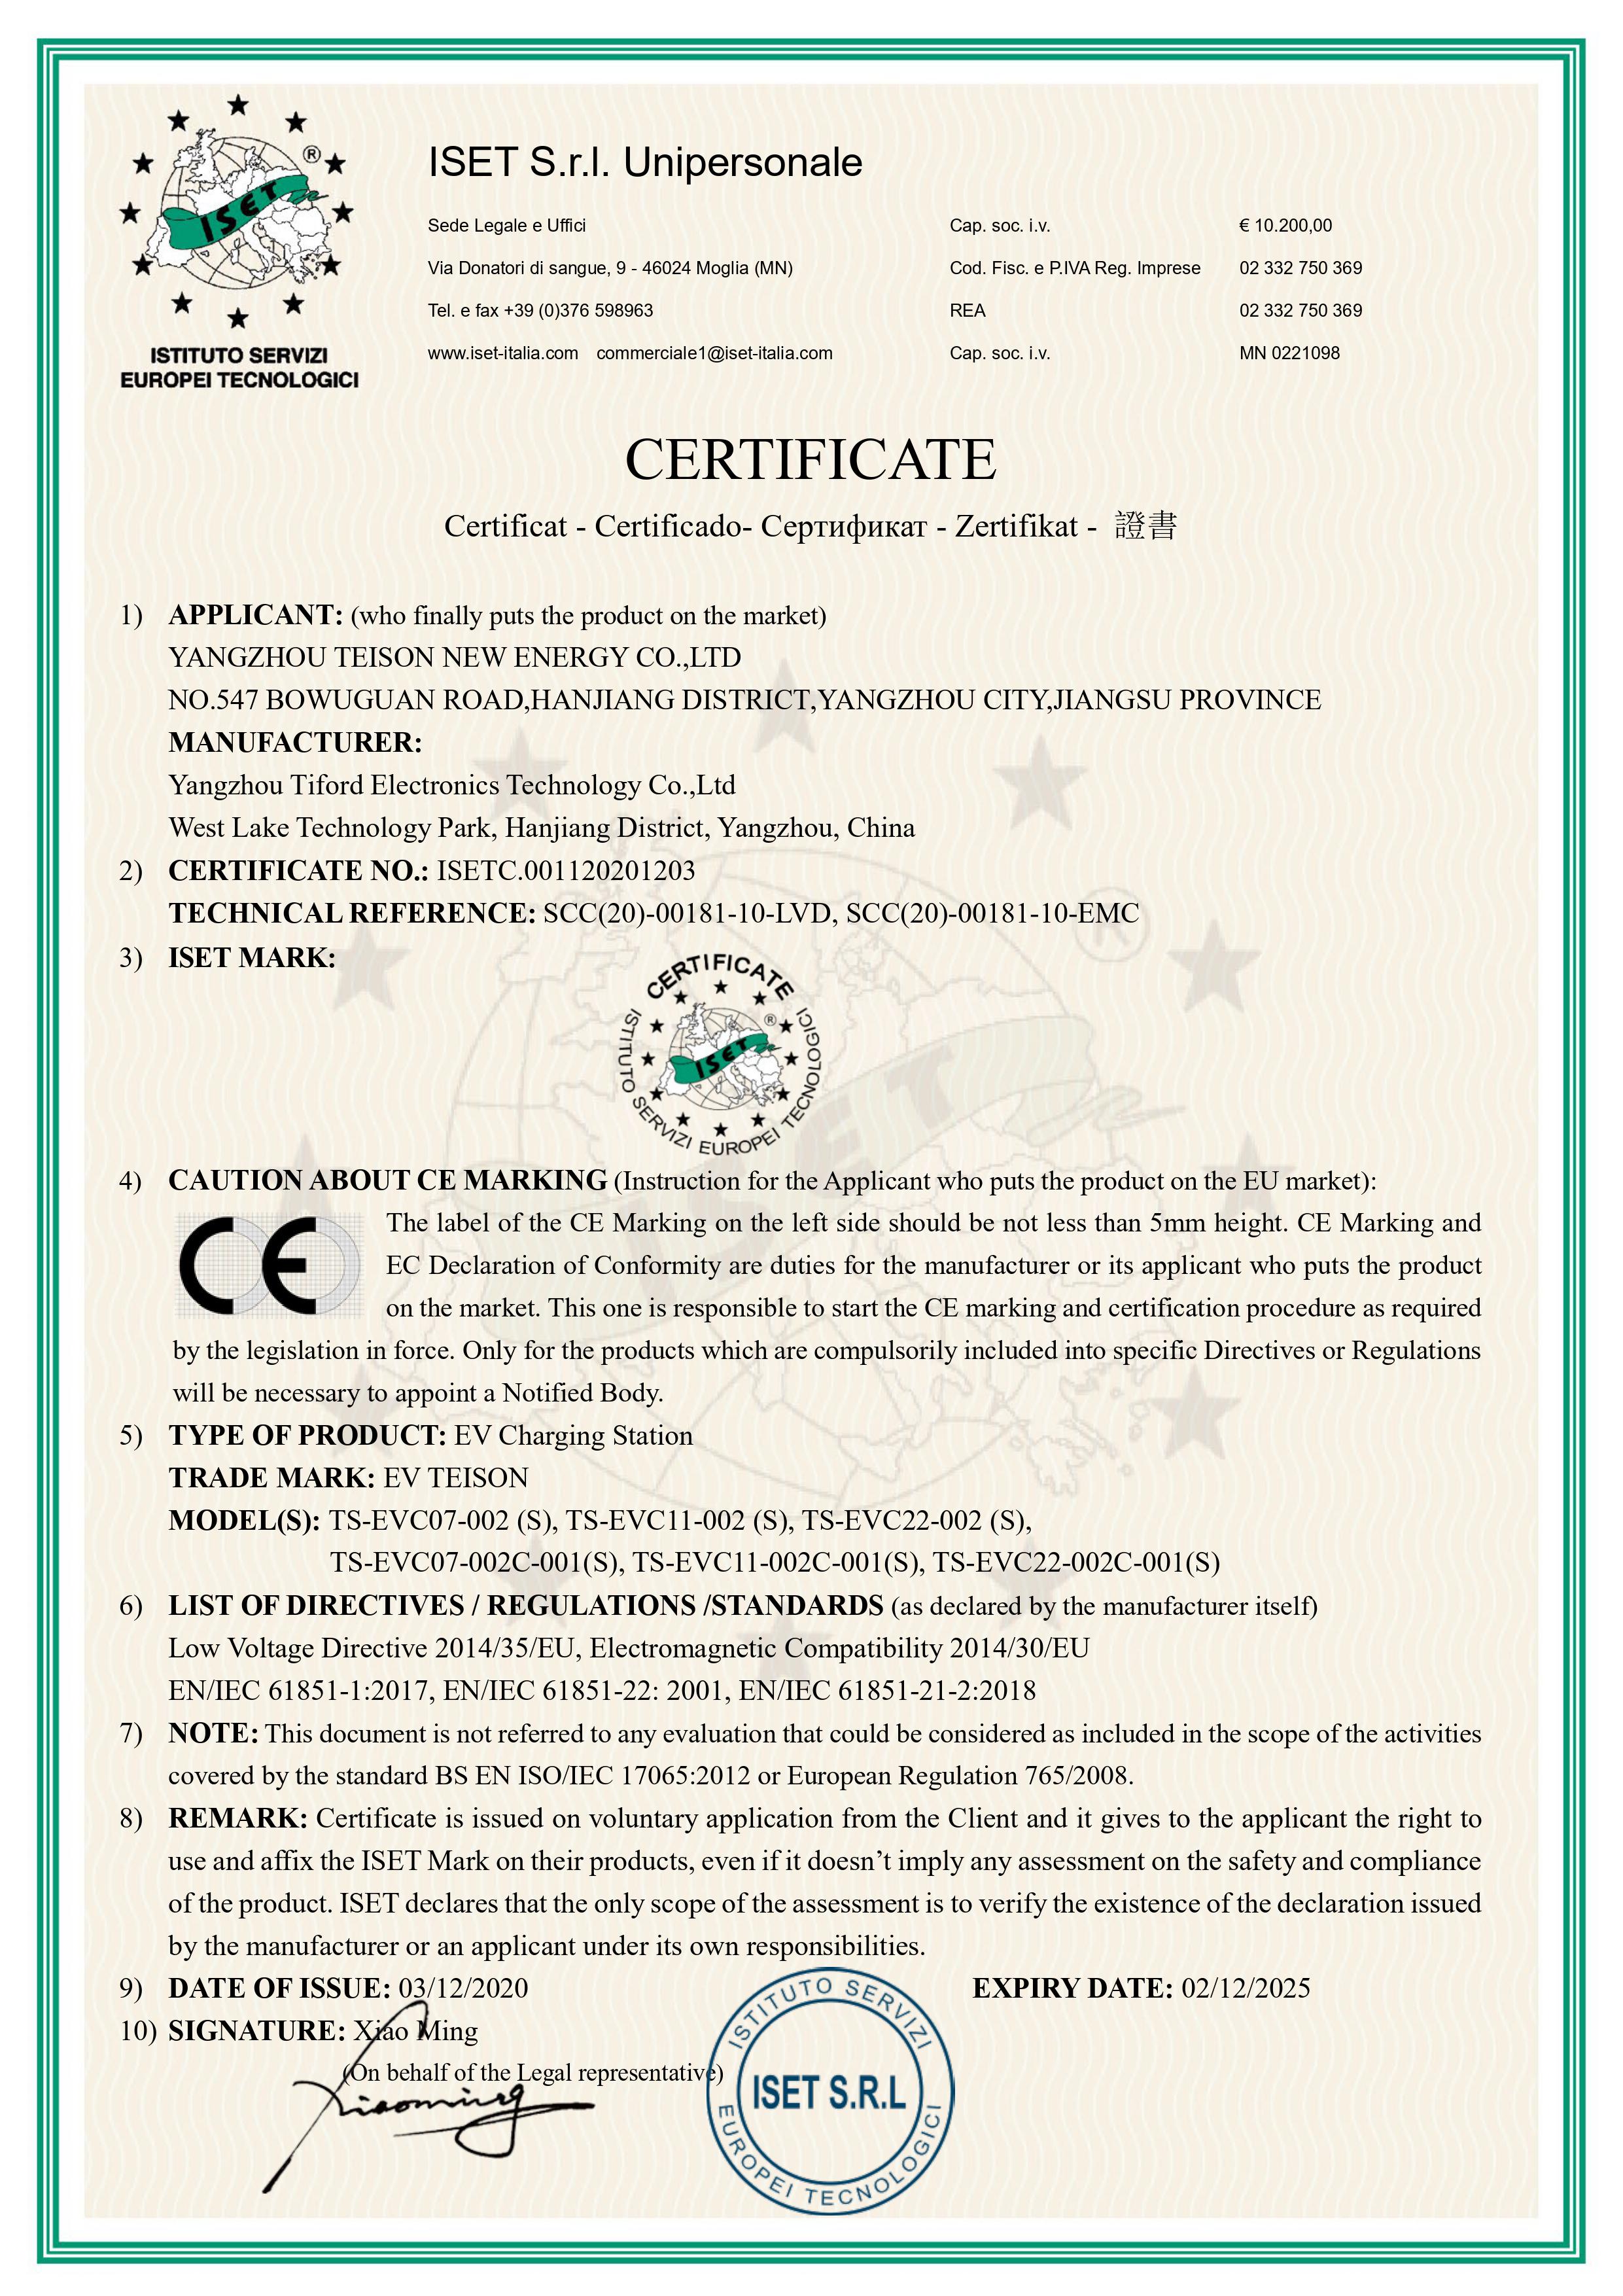 Pro/Pro Smart certificate